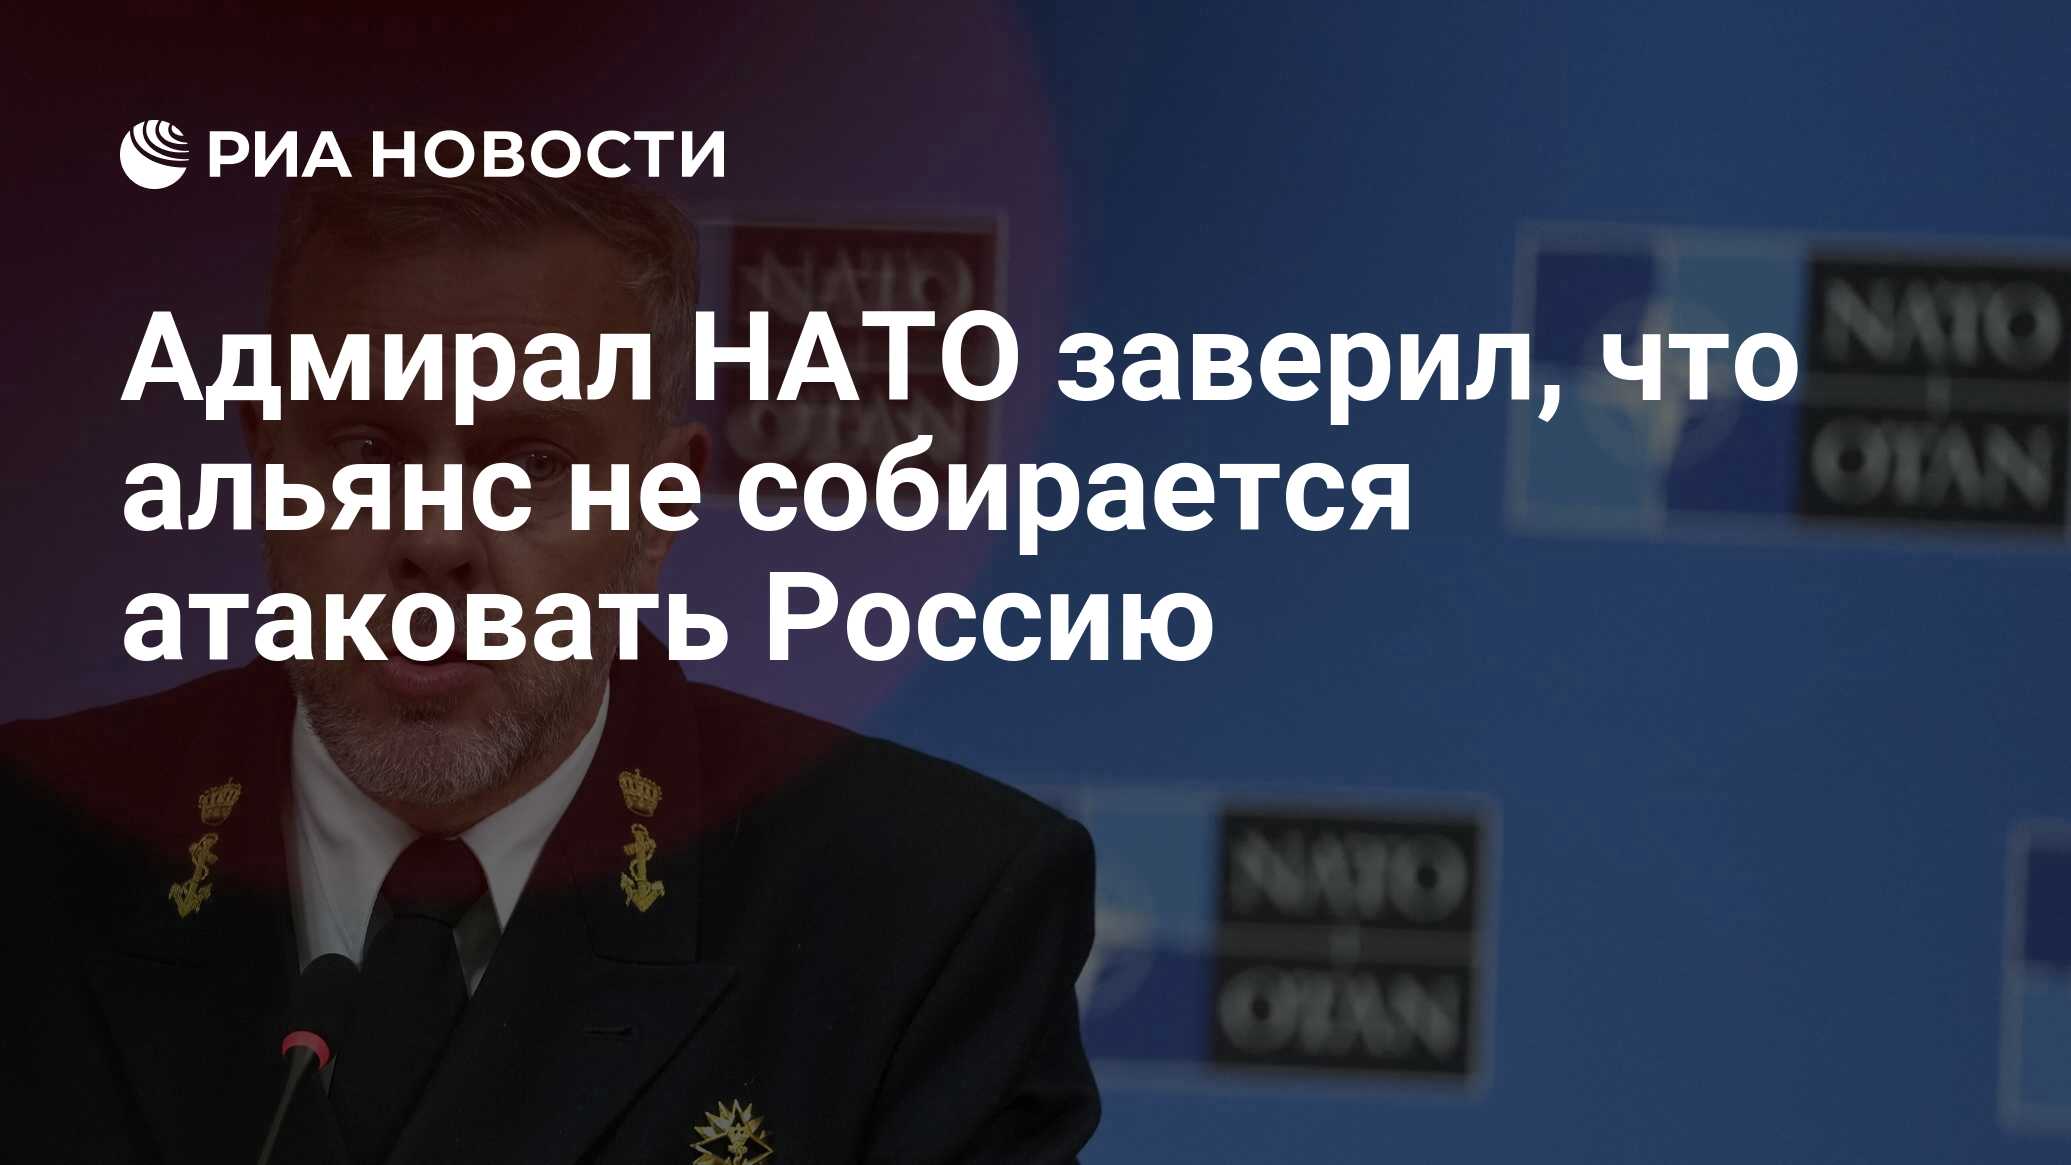 Глава нато бауэр. Военный комитет НАТО. Комитета НАТО Адмирал Бауэр. НАТО на Украине фото.